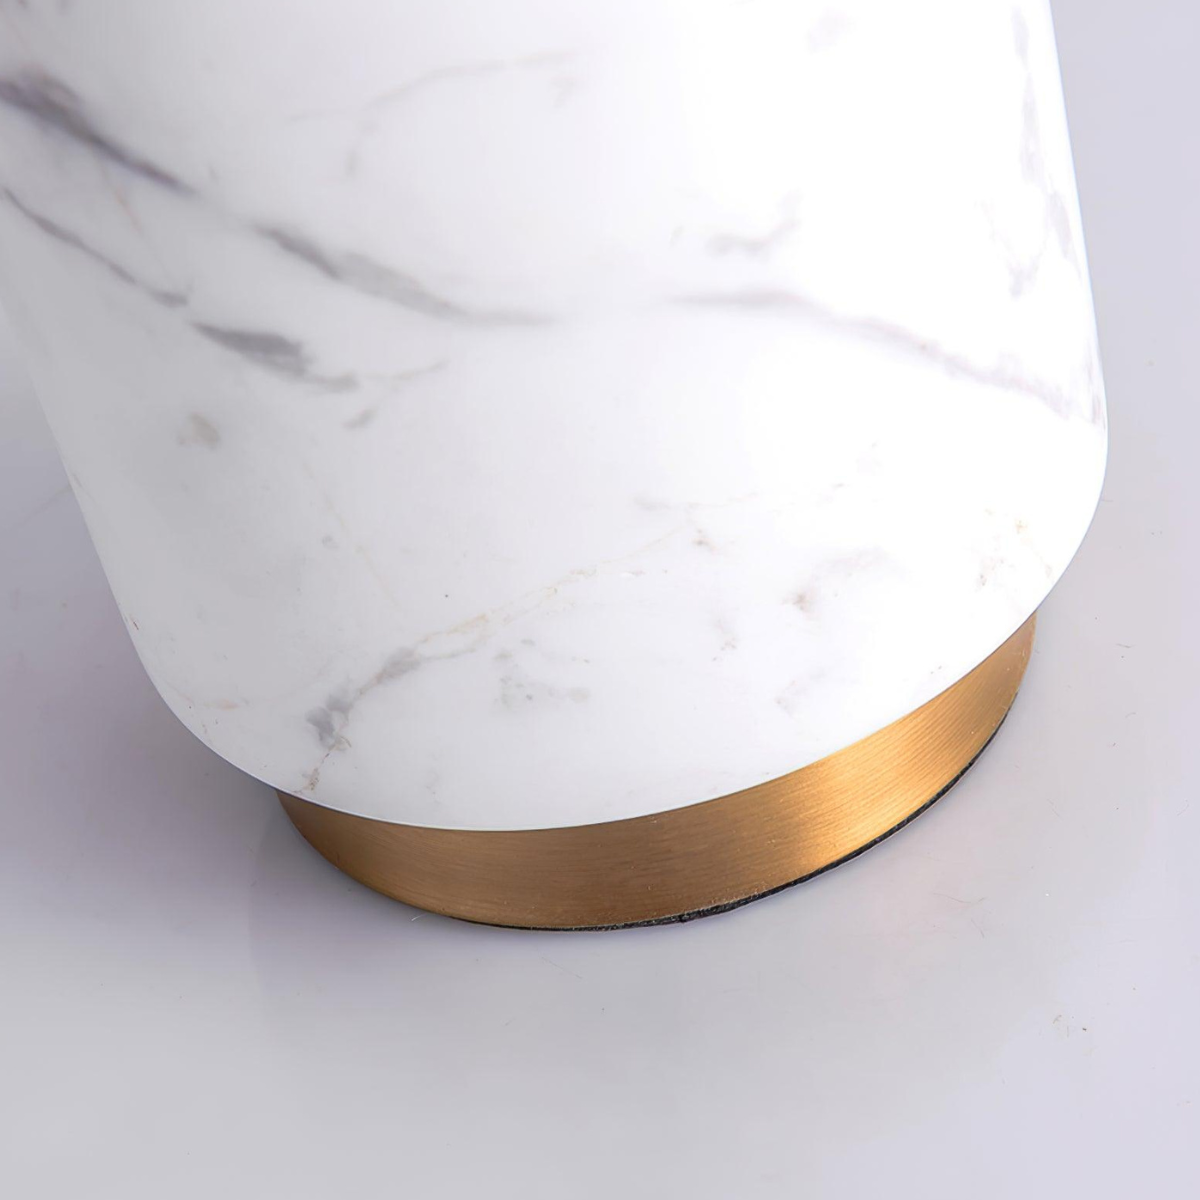 Joana-Marble-Based-Table-Lamp-13